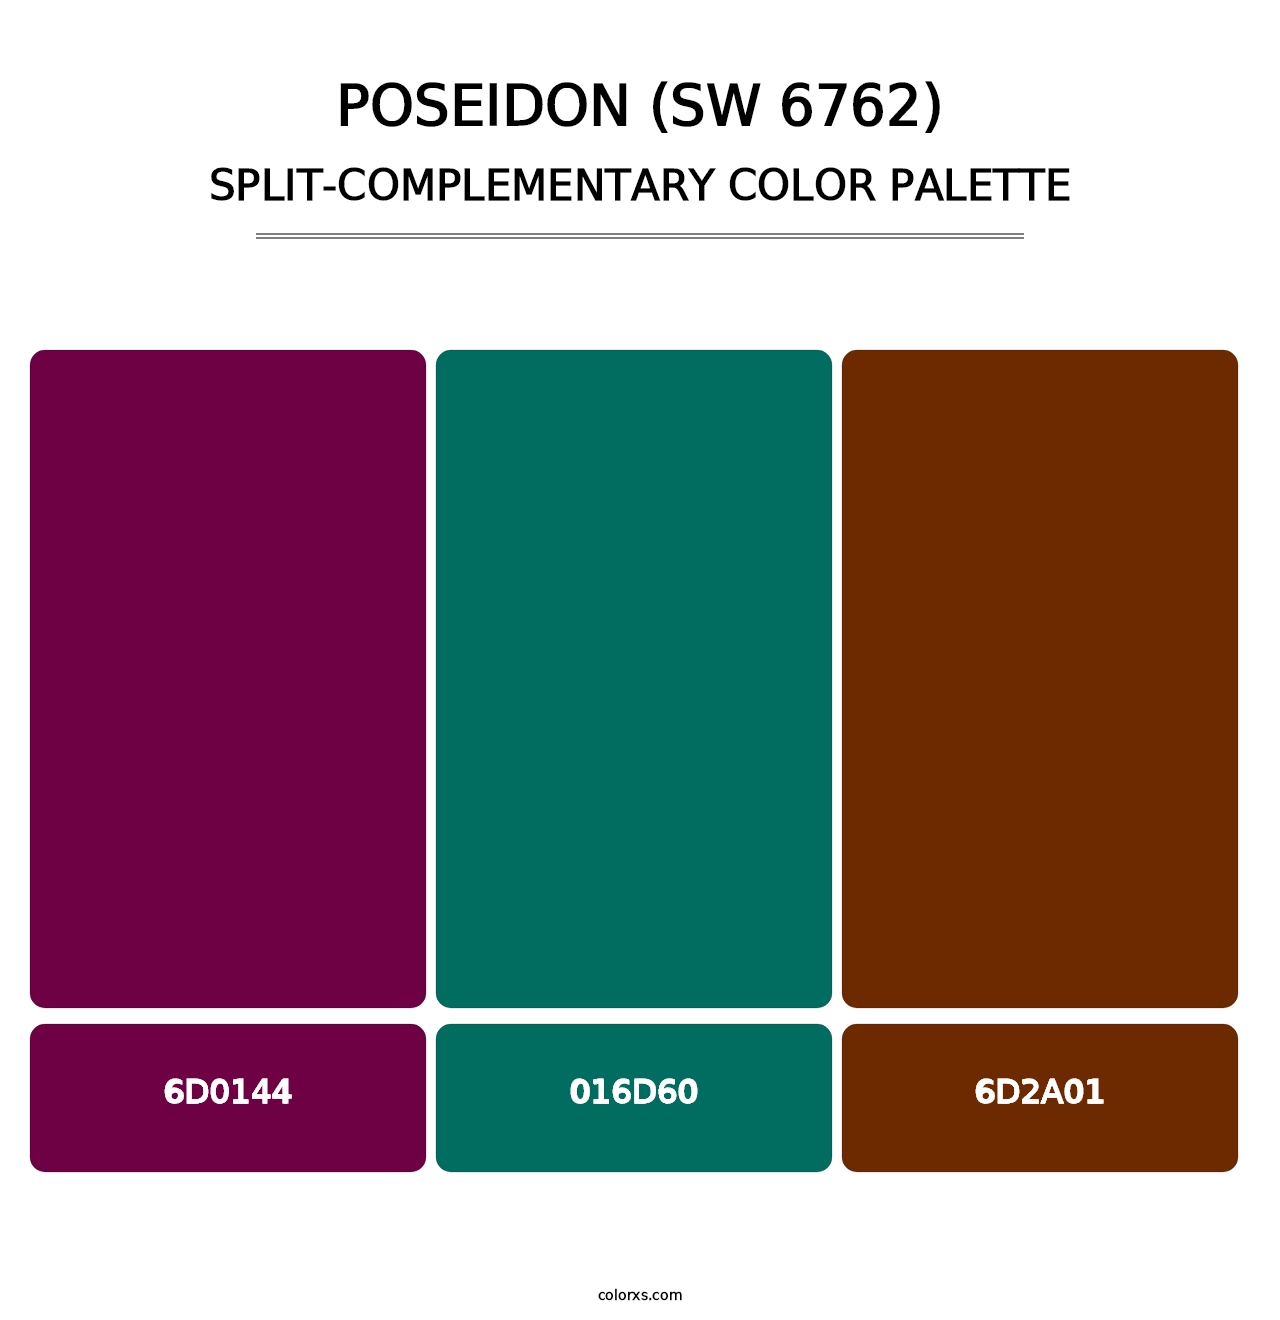 Poseidon (SW 6762) - Split-Complementary Color Palette